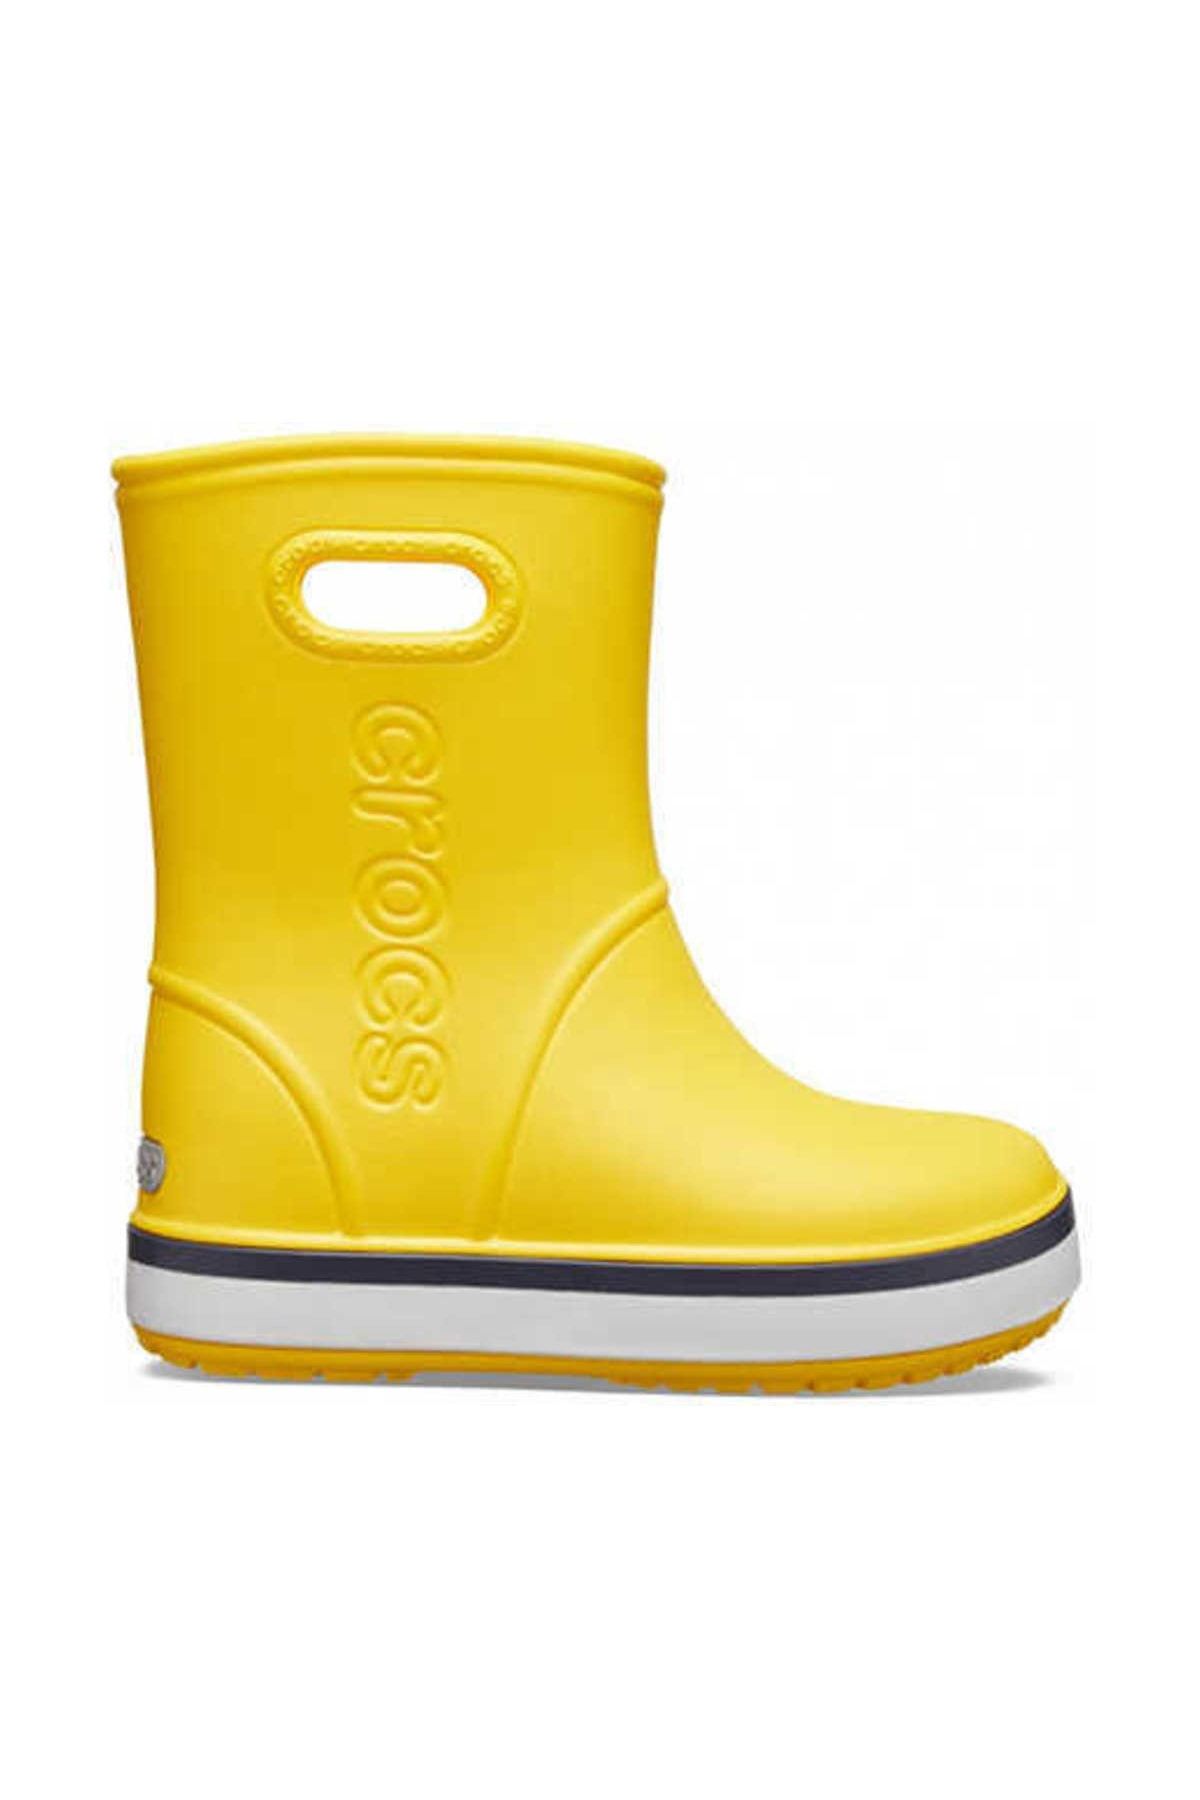 Crocs 205827-734 Yellow Crocband Rain Boot